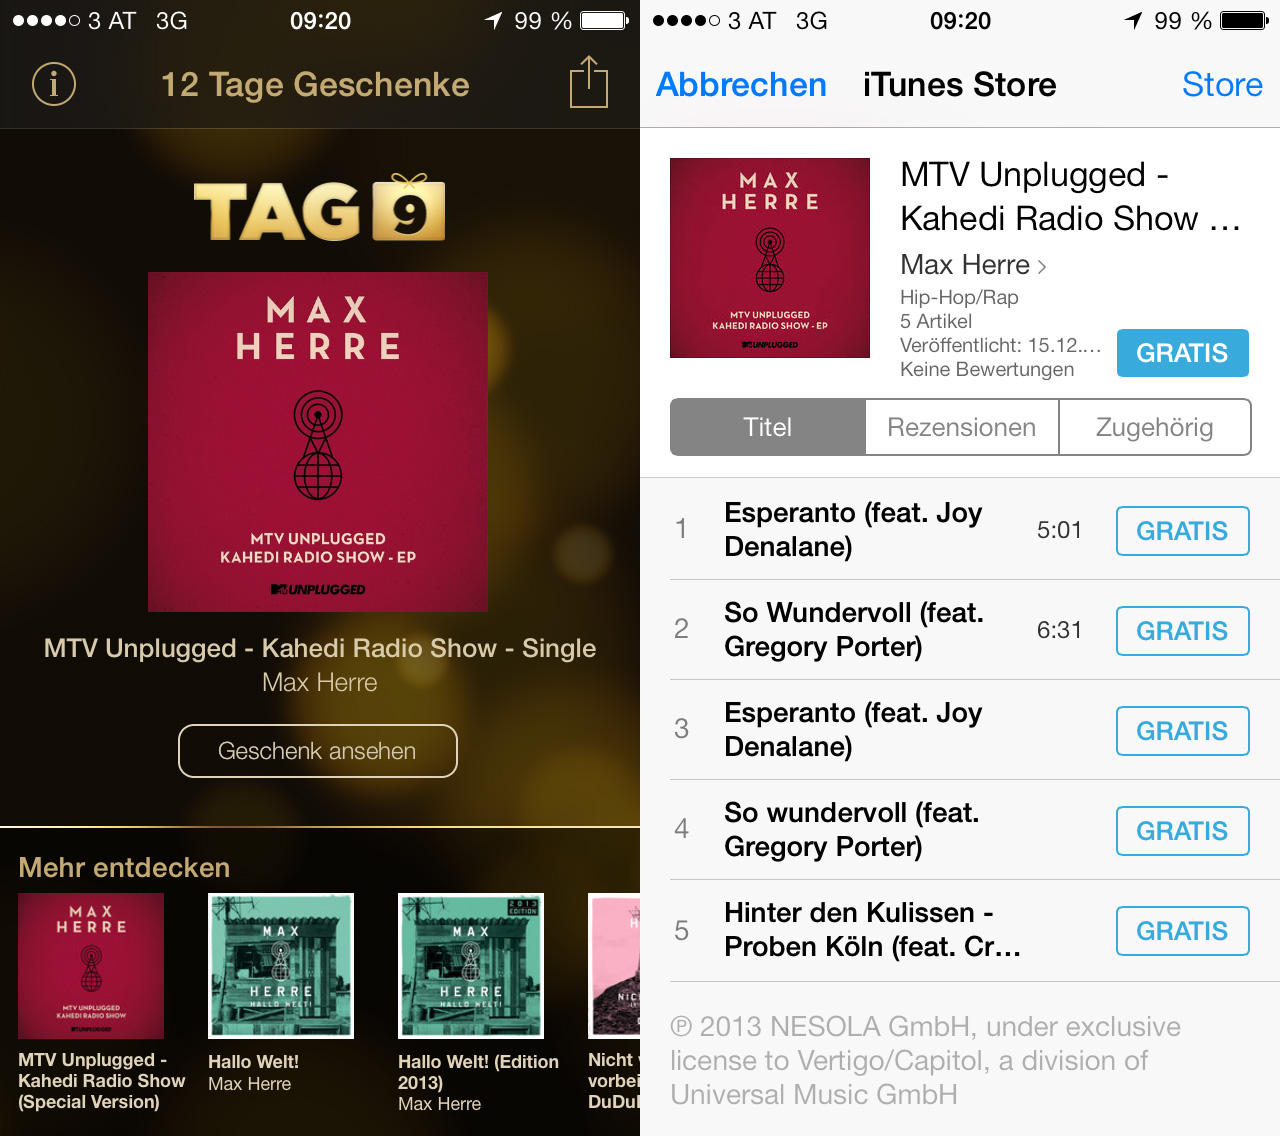 12 Tage Geschenke: Tag 09 – Kahedi Radio Show (MTV Unplugged)